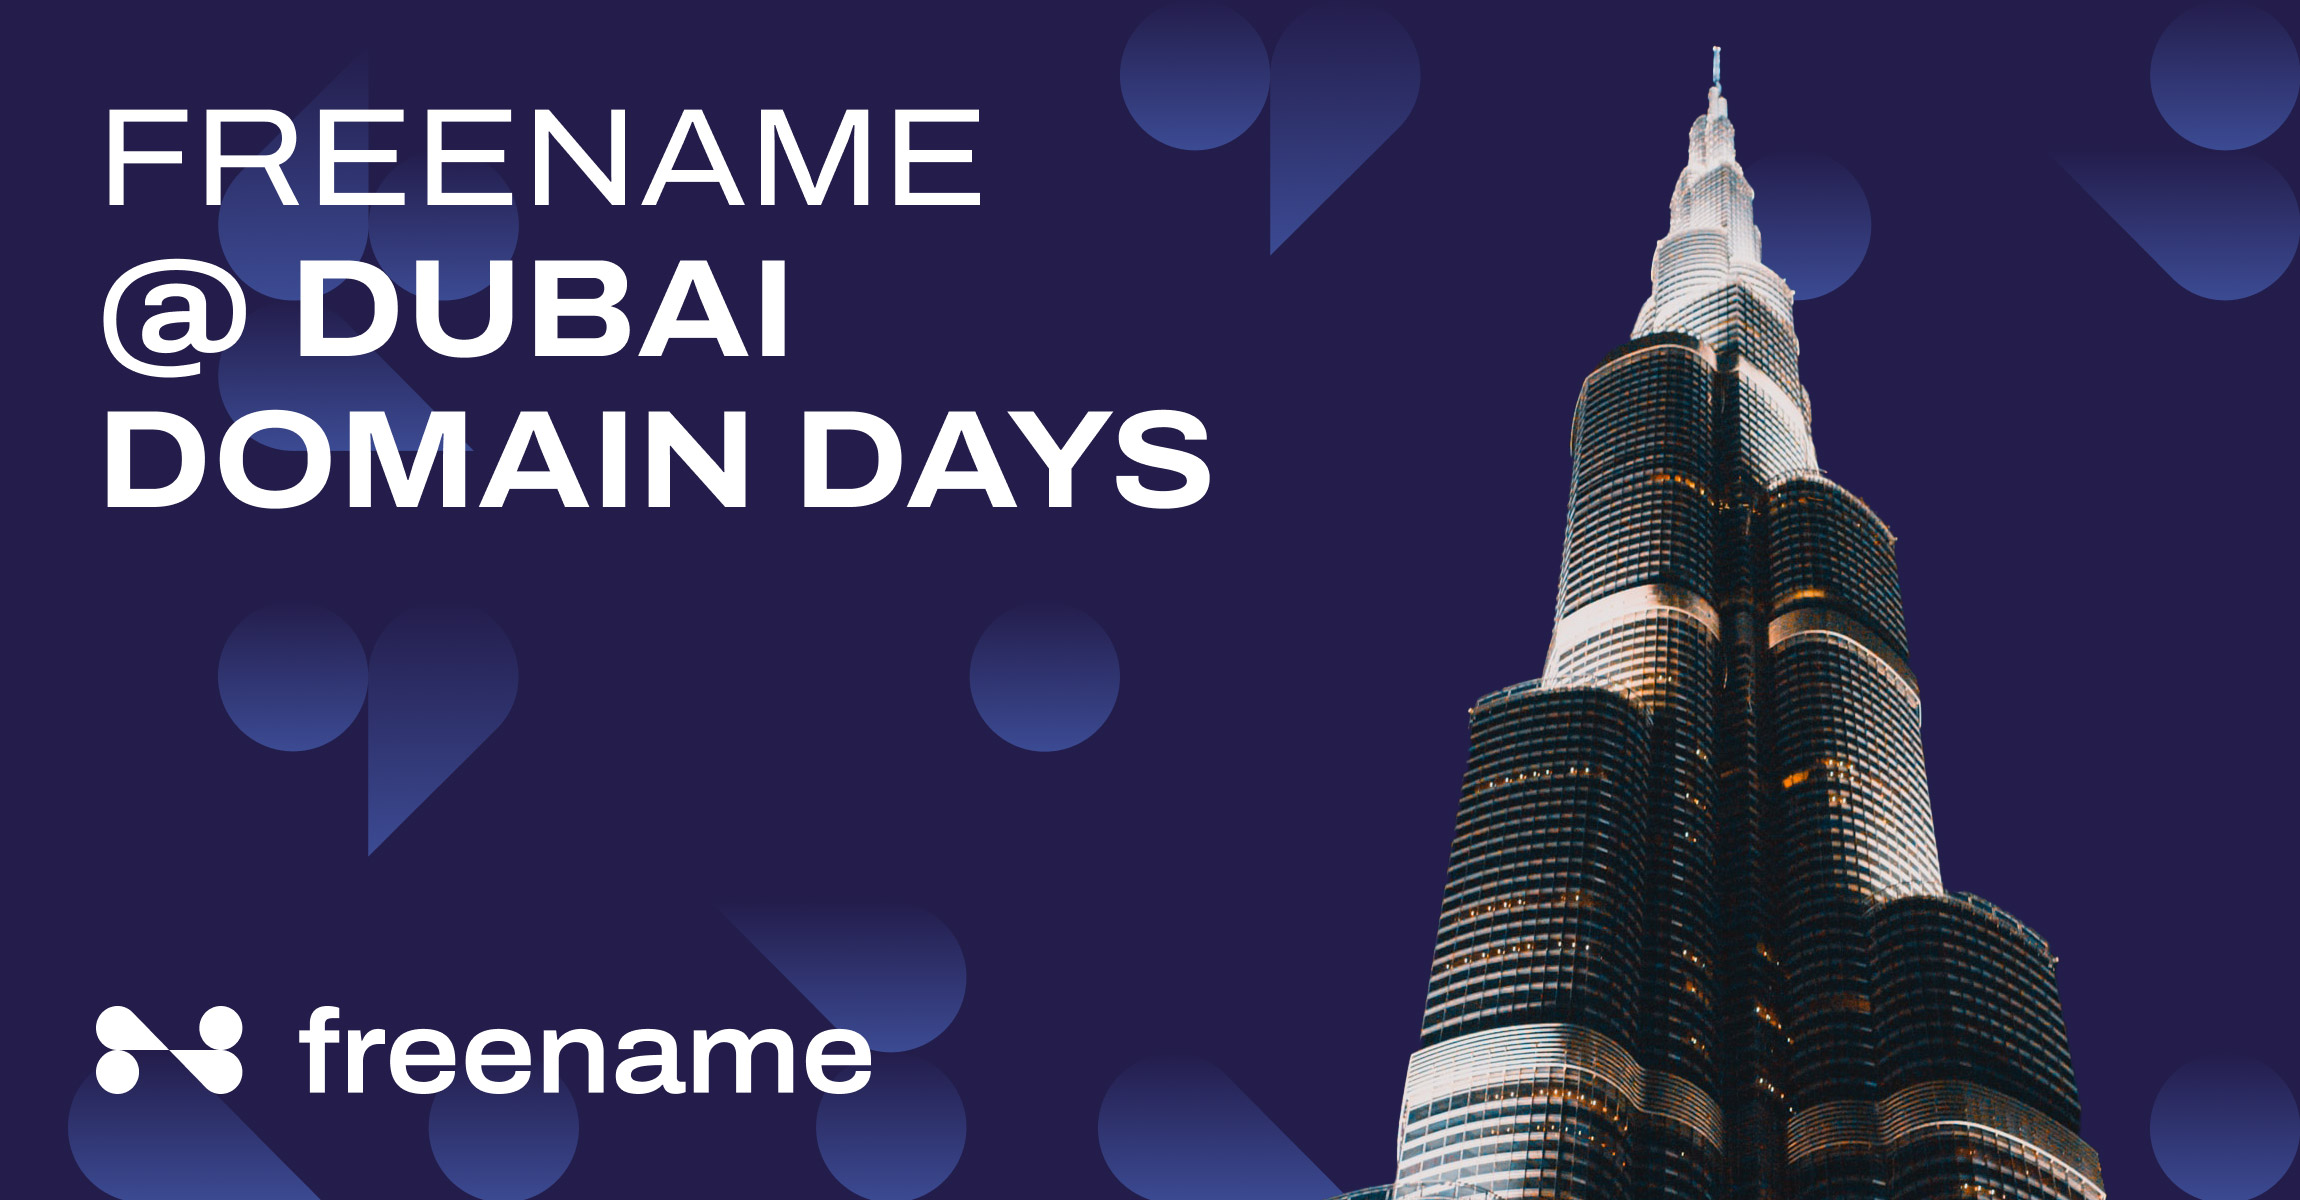 Freename at Dubai Domain Days